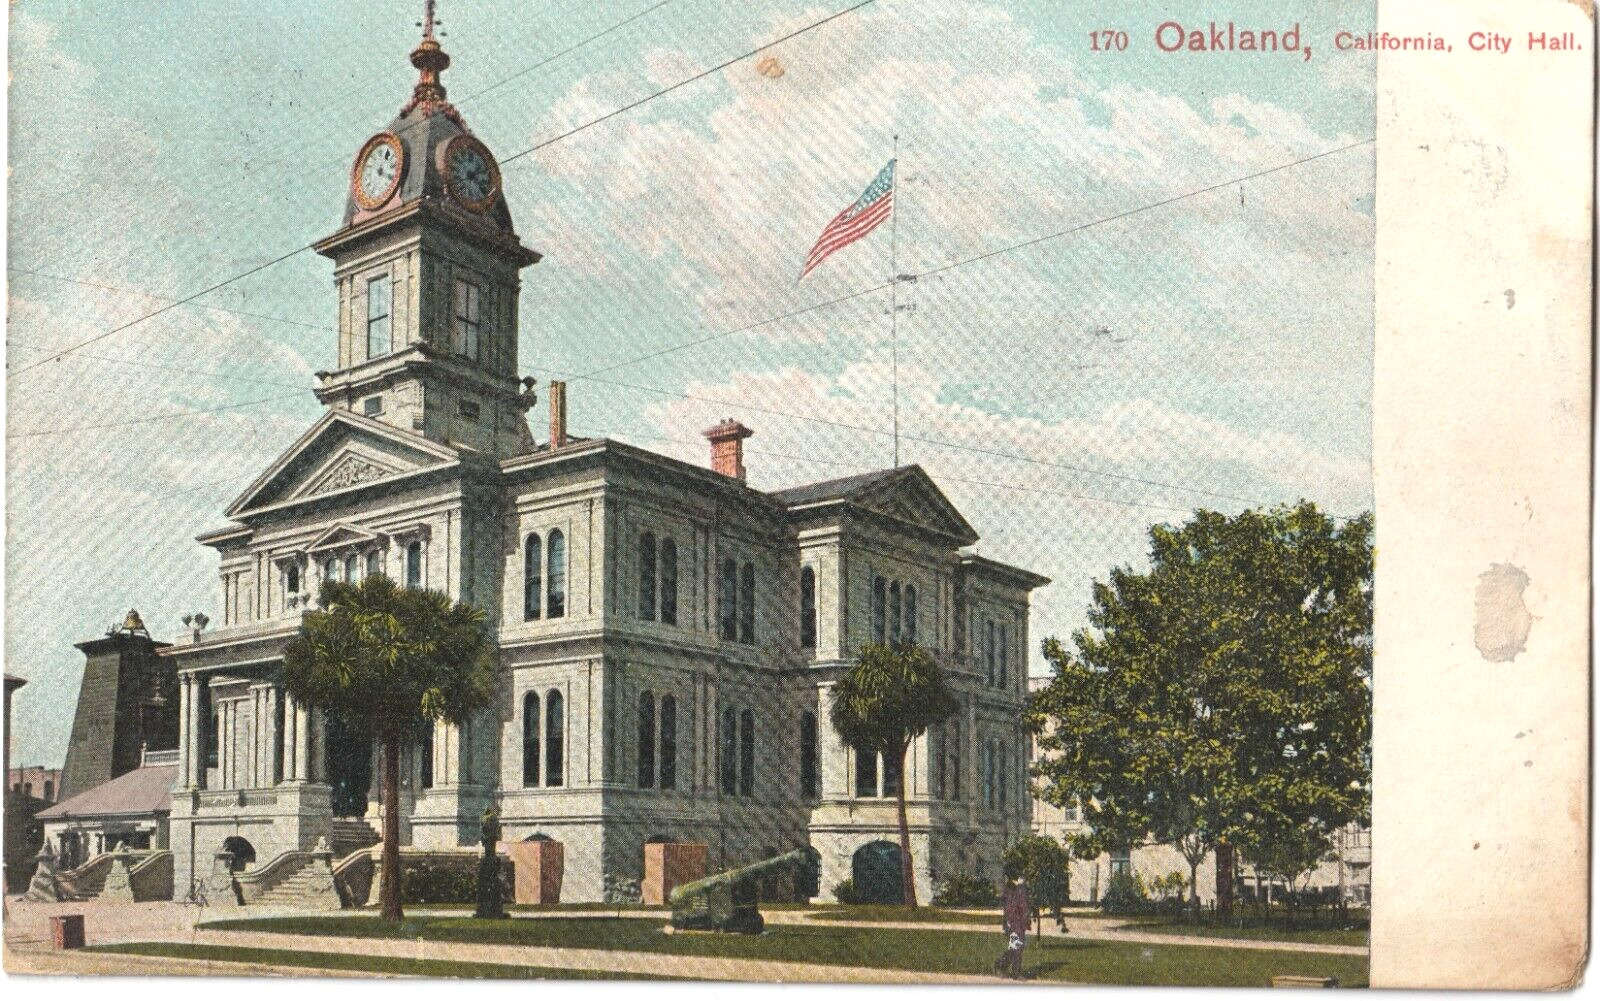 City Hall-Oakland, California CA-antique 1908 posted postcard